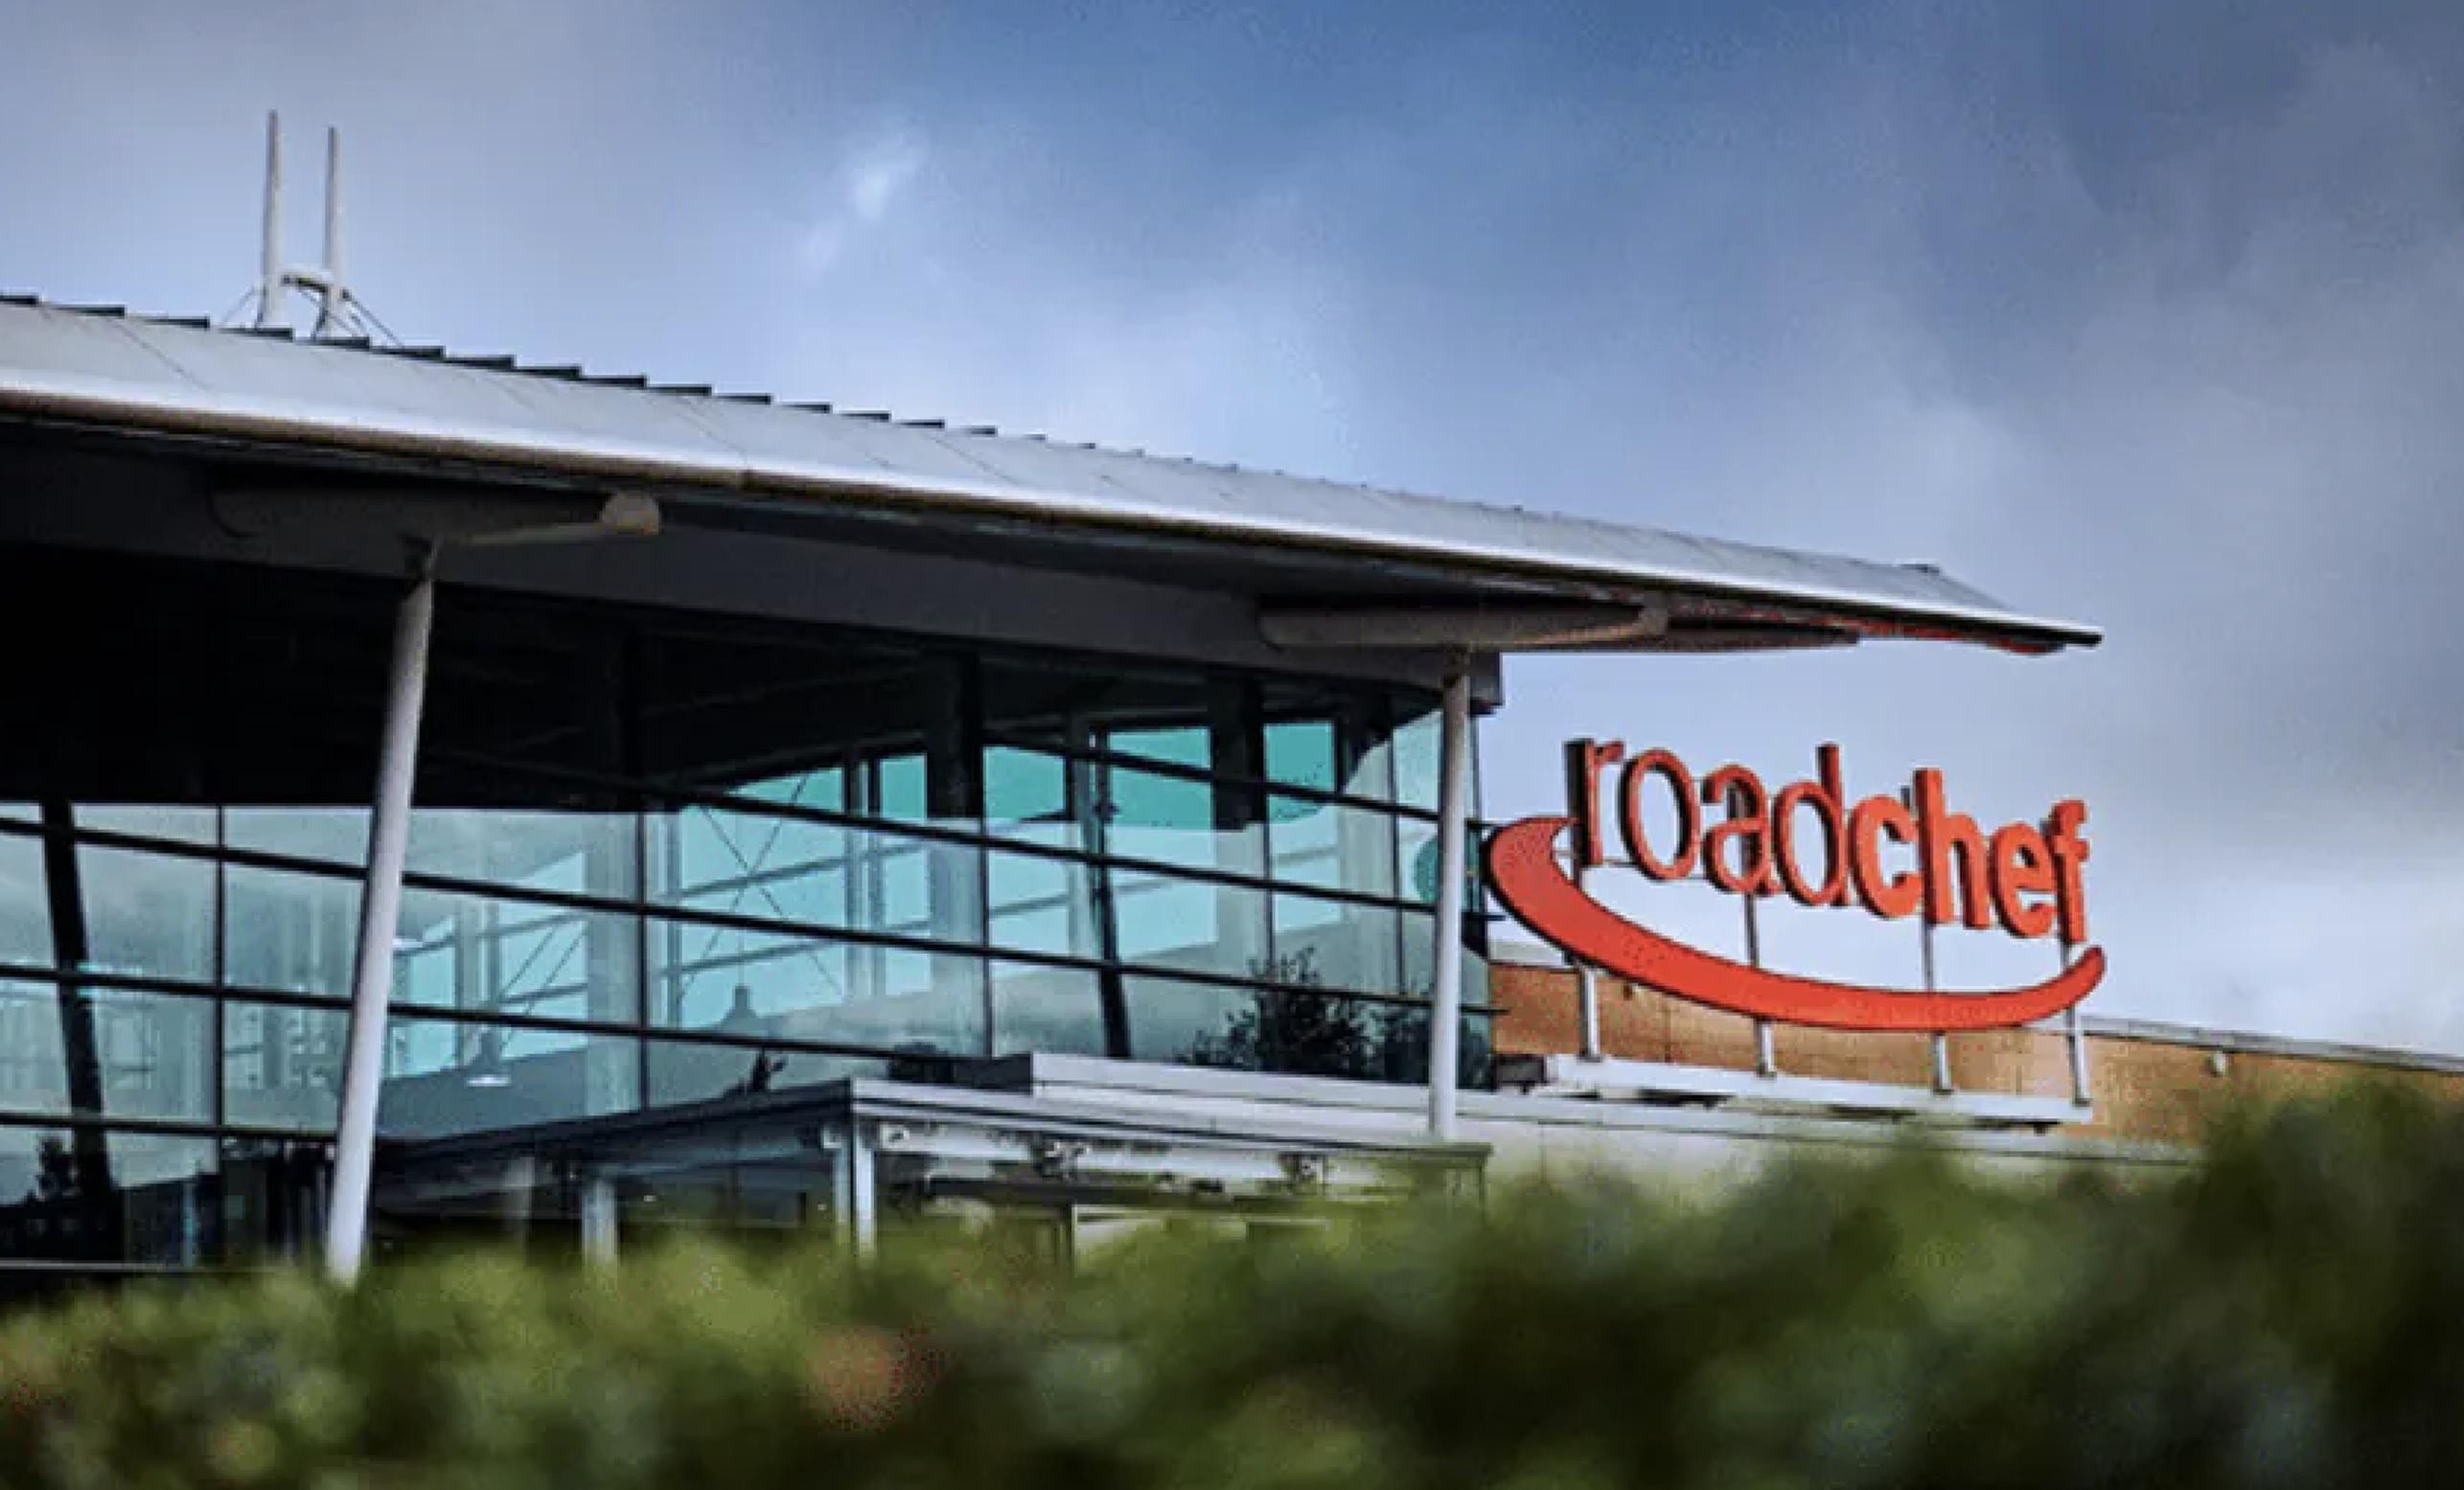 Roadchef has 30 locations across the UK motorway network